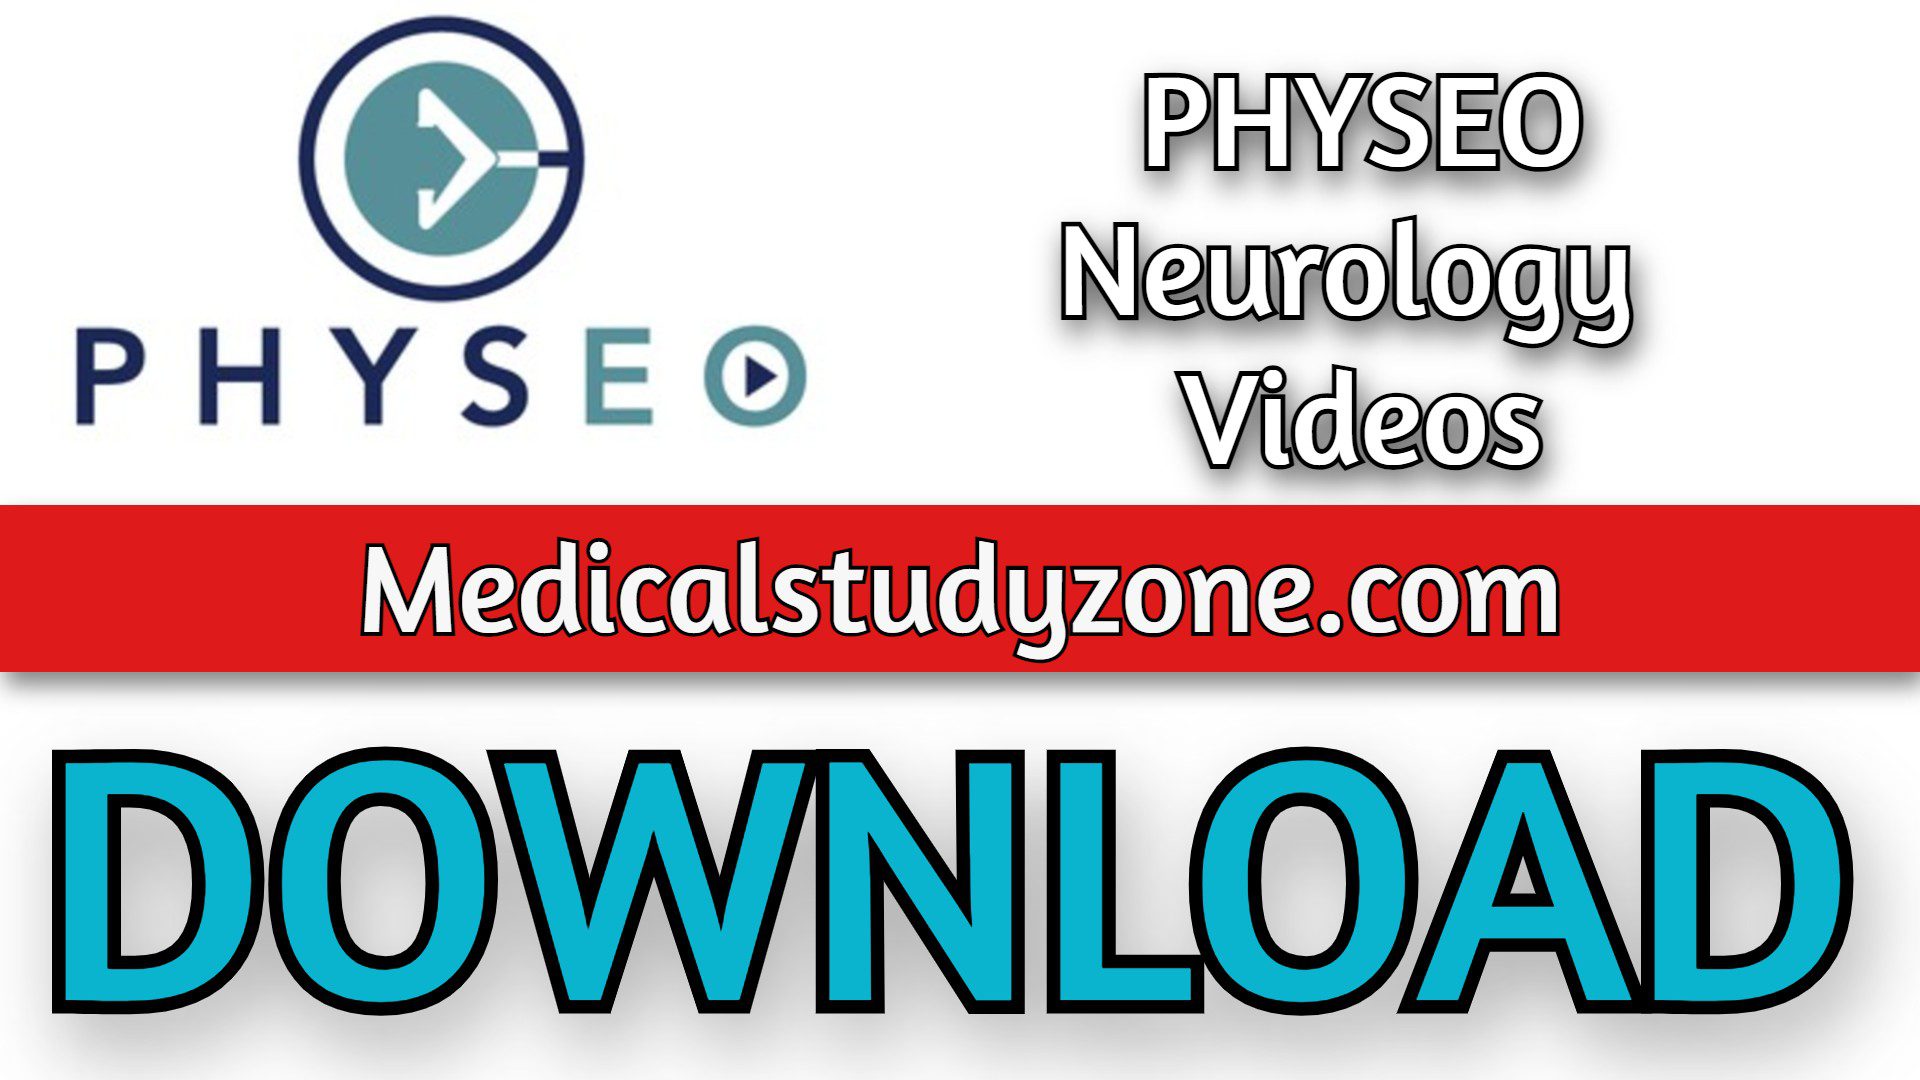 PHYSEO Neurology Videos 2021 Free Download